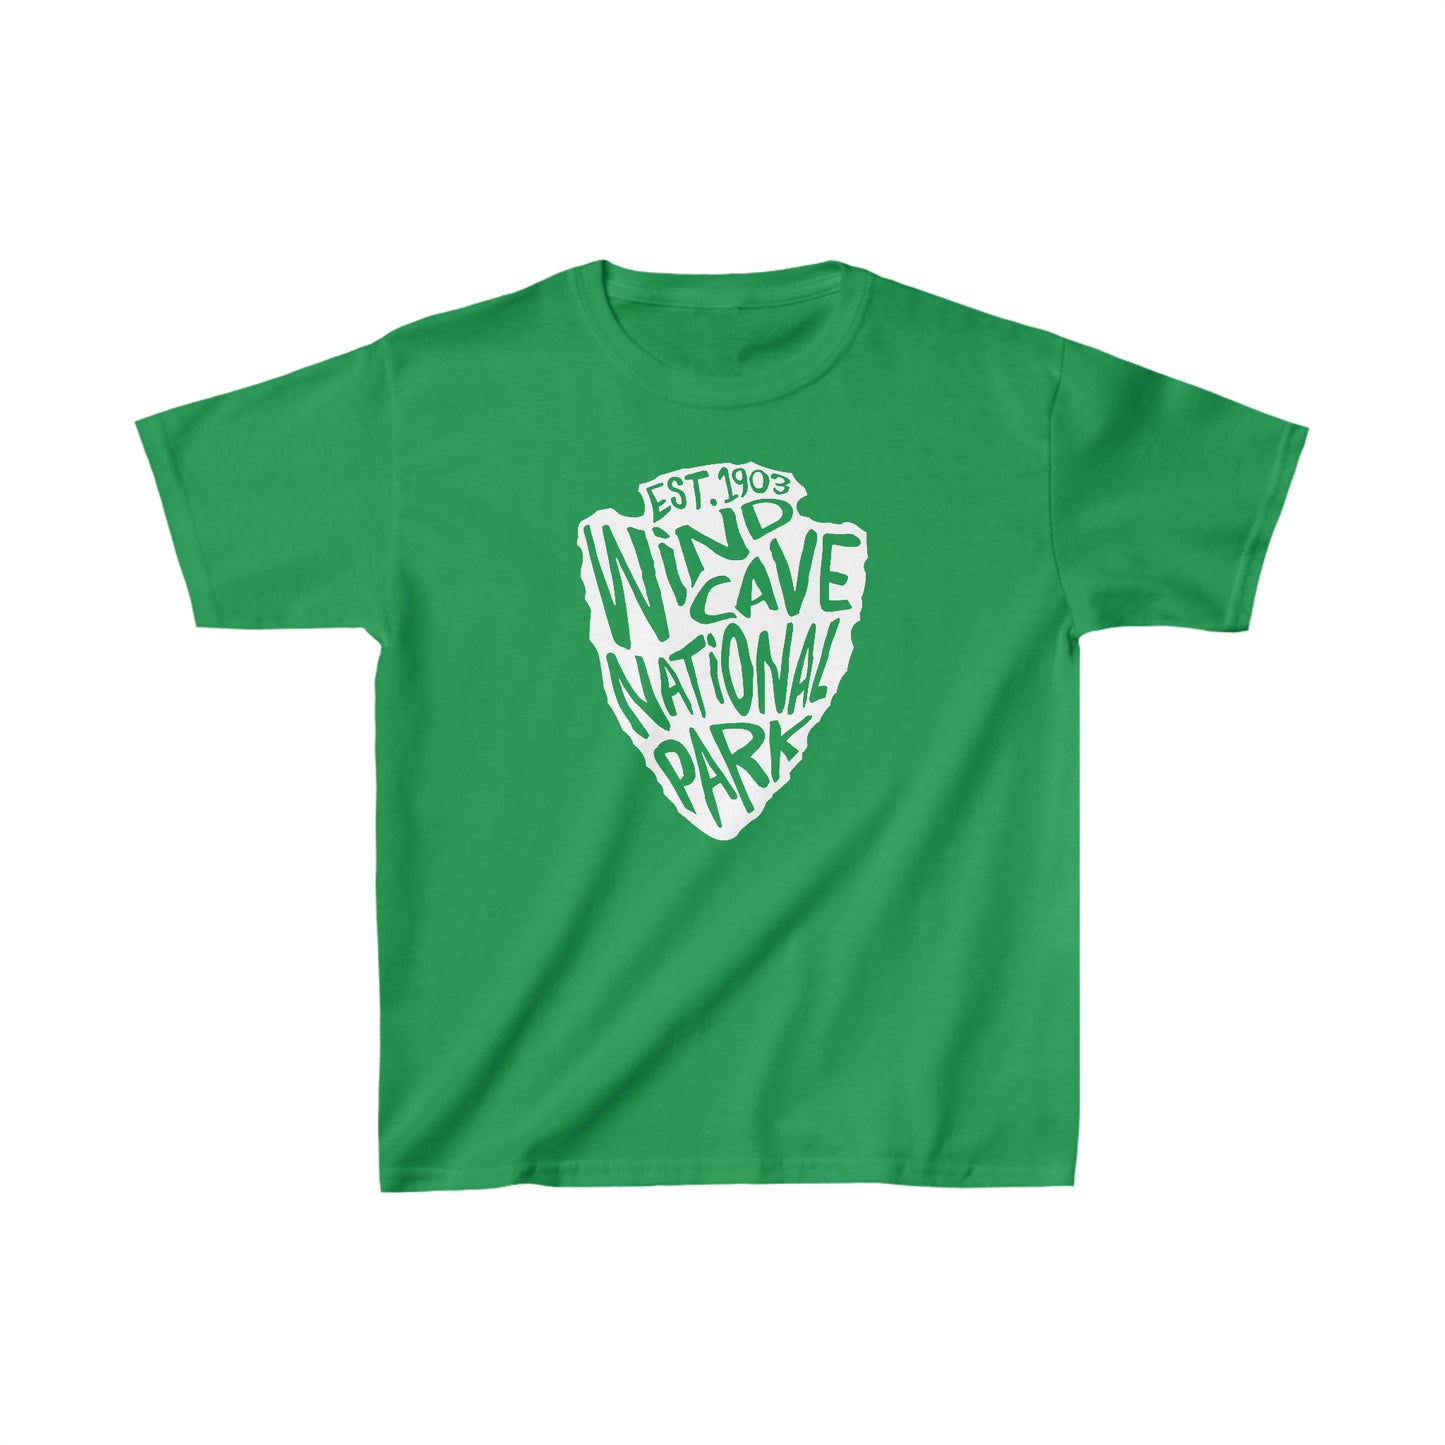 Wind Cave National Park Child T-Shirt - Arrowhead Design